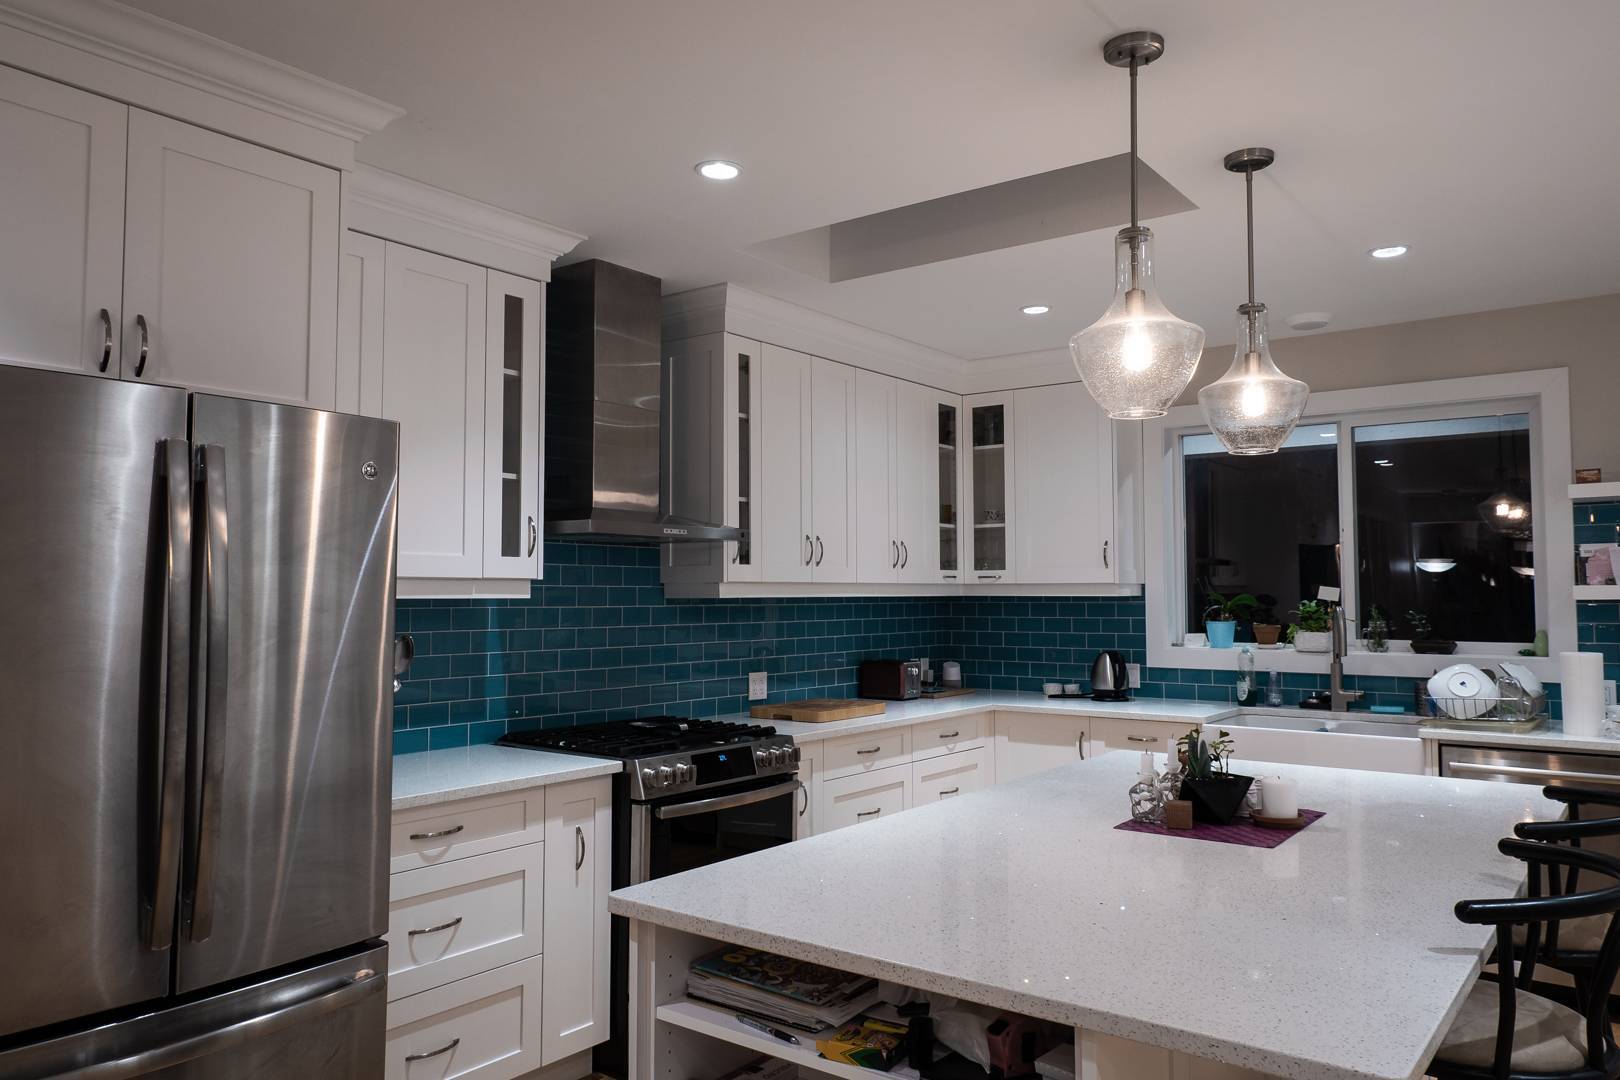 Modern kitchen with white cabinets, island, and teal blue tile backsplash